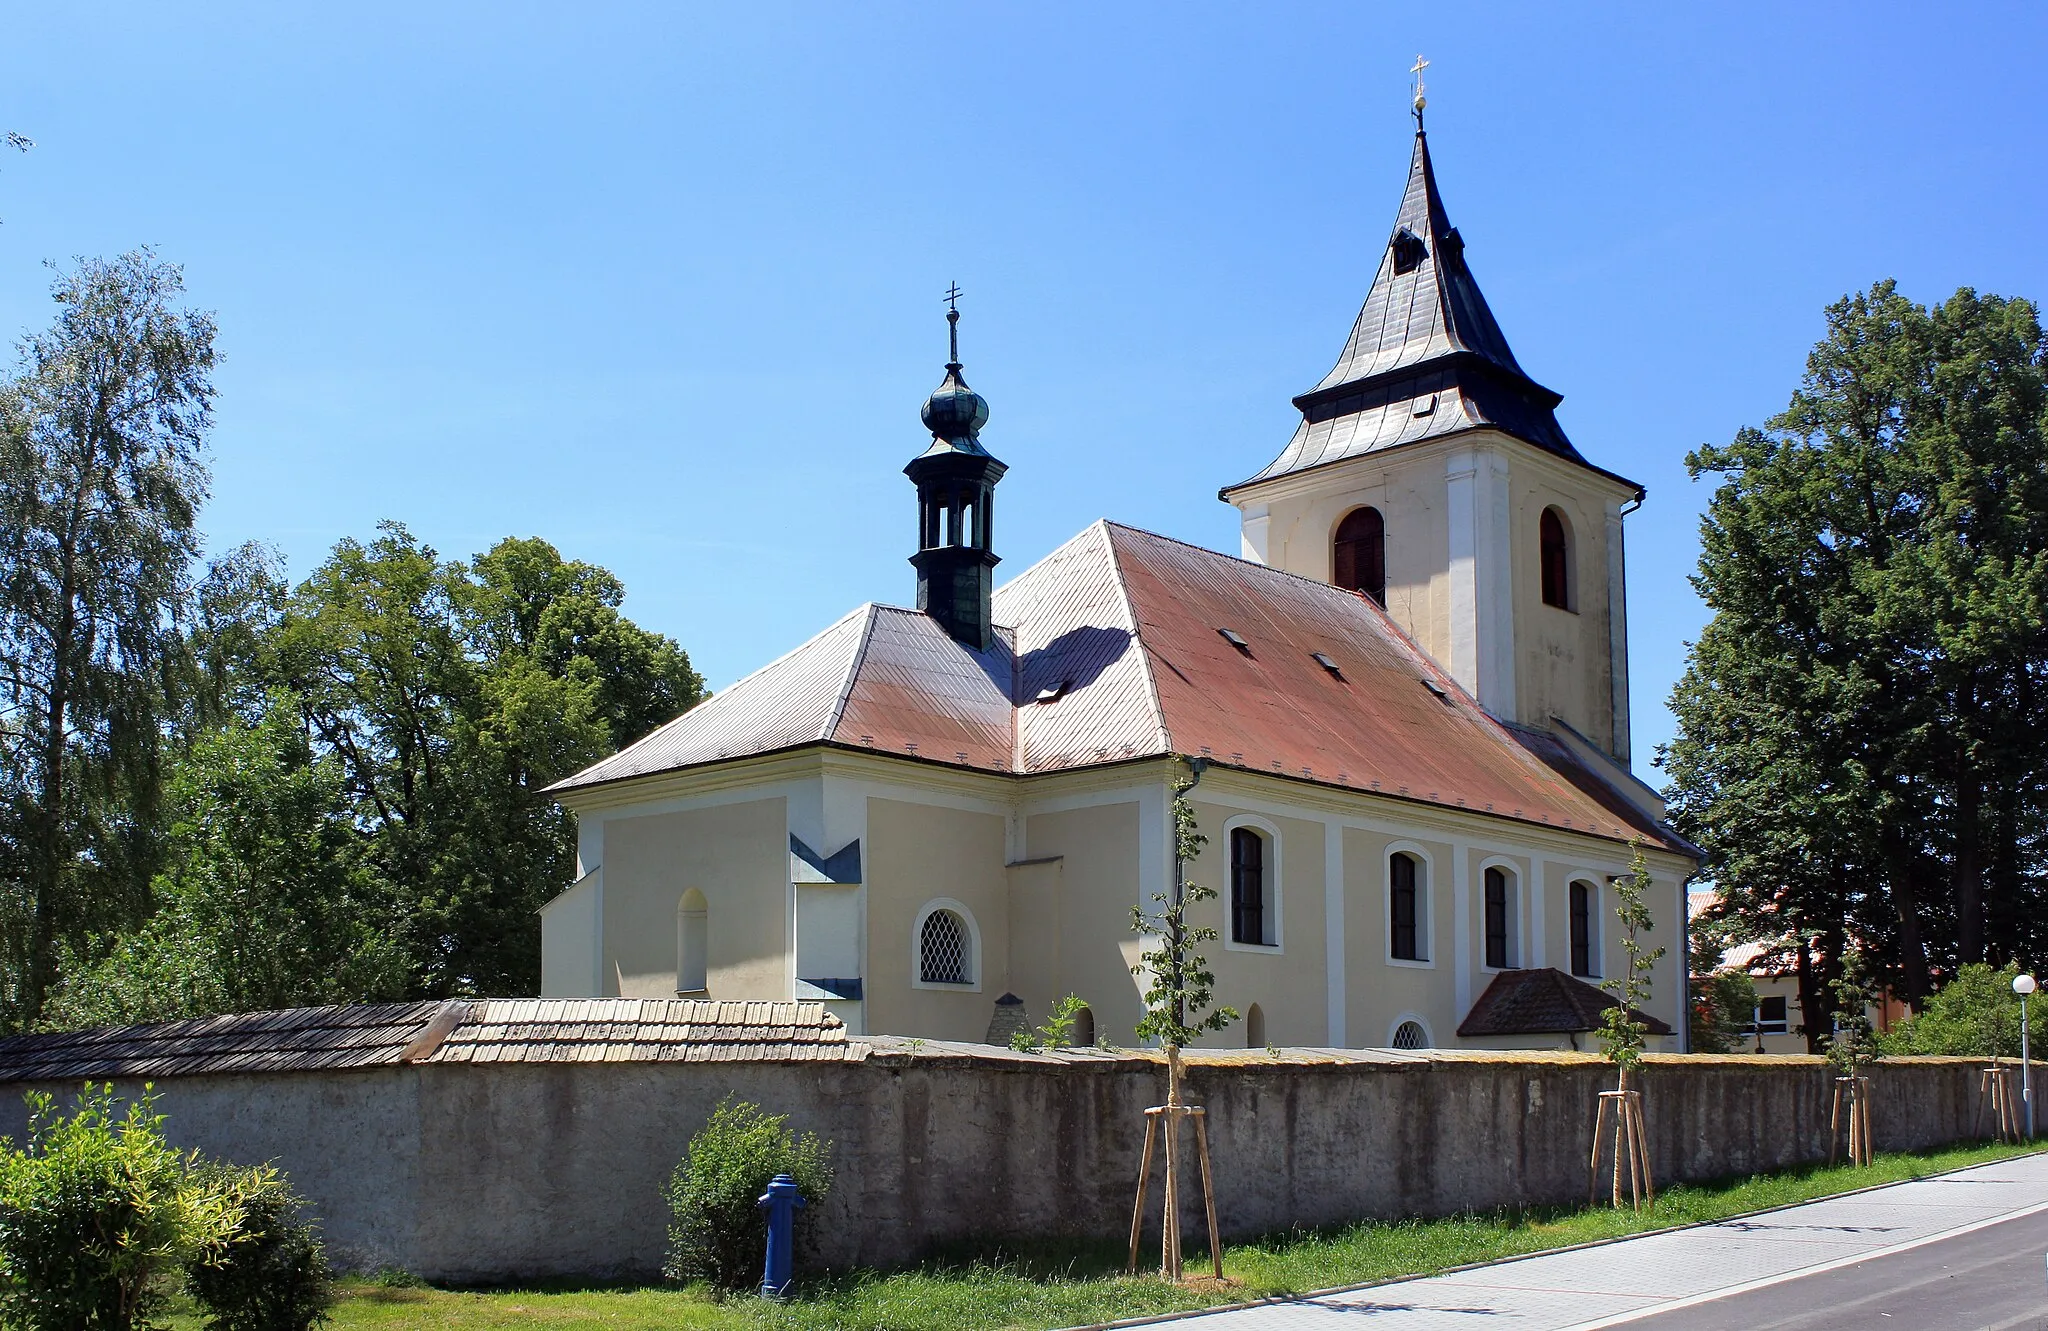 Photo showing: Saint Nicholas Church in Sebranice, Czech Republic